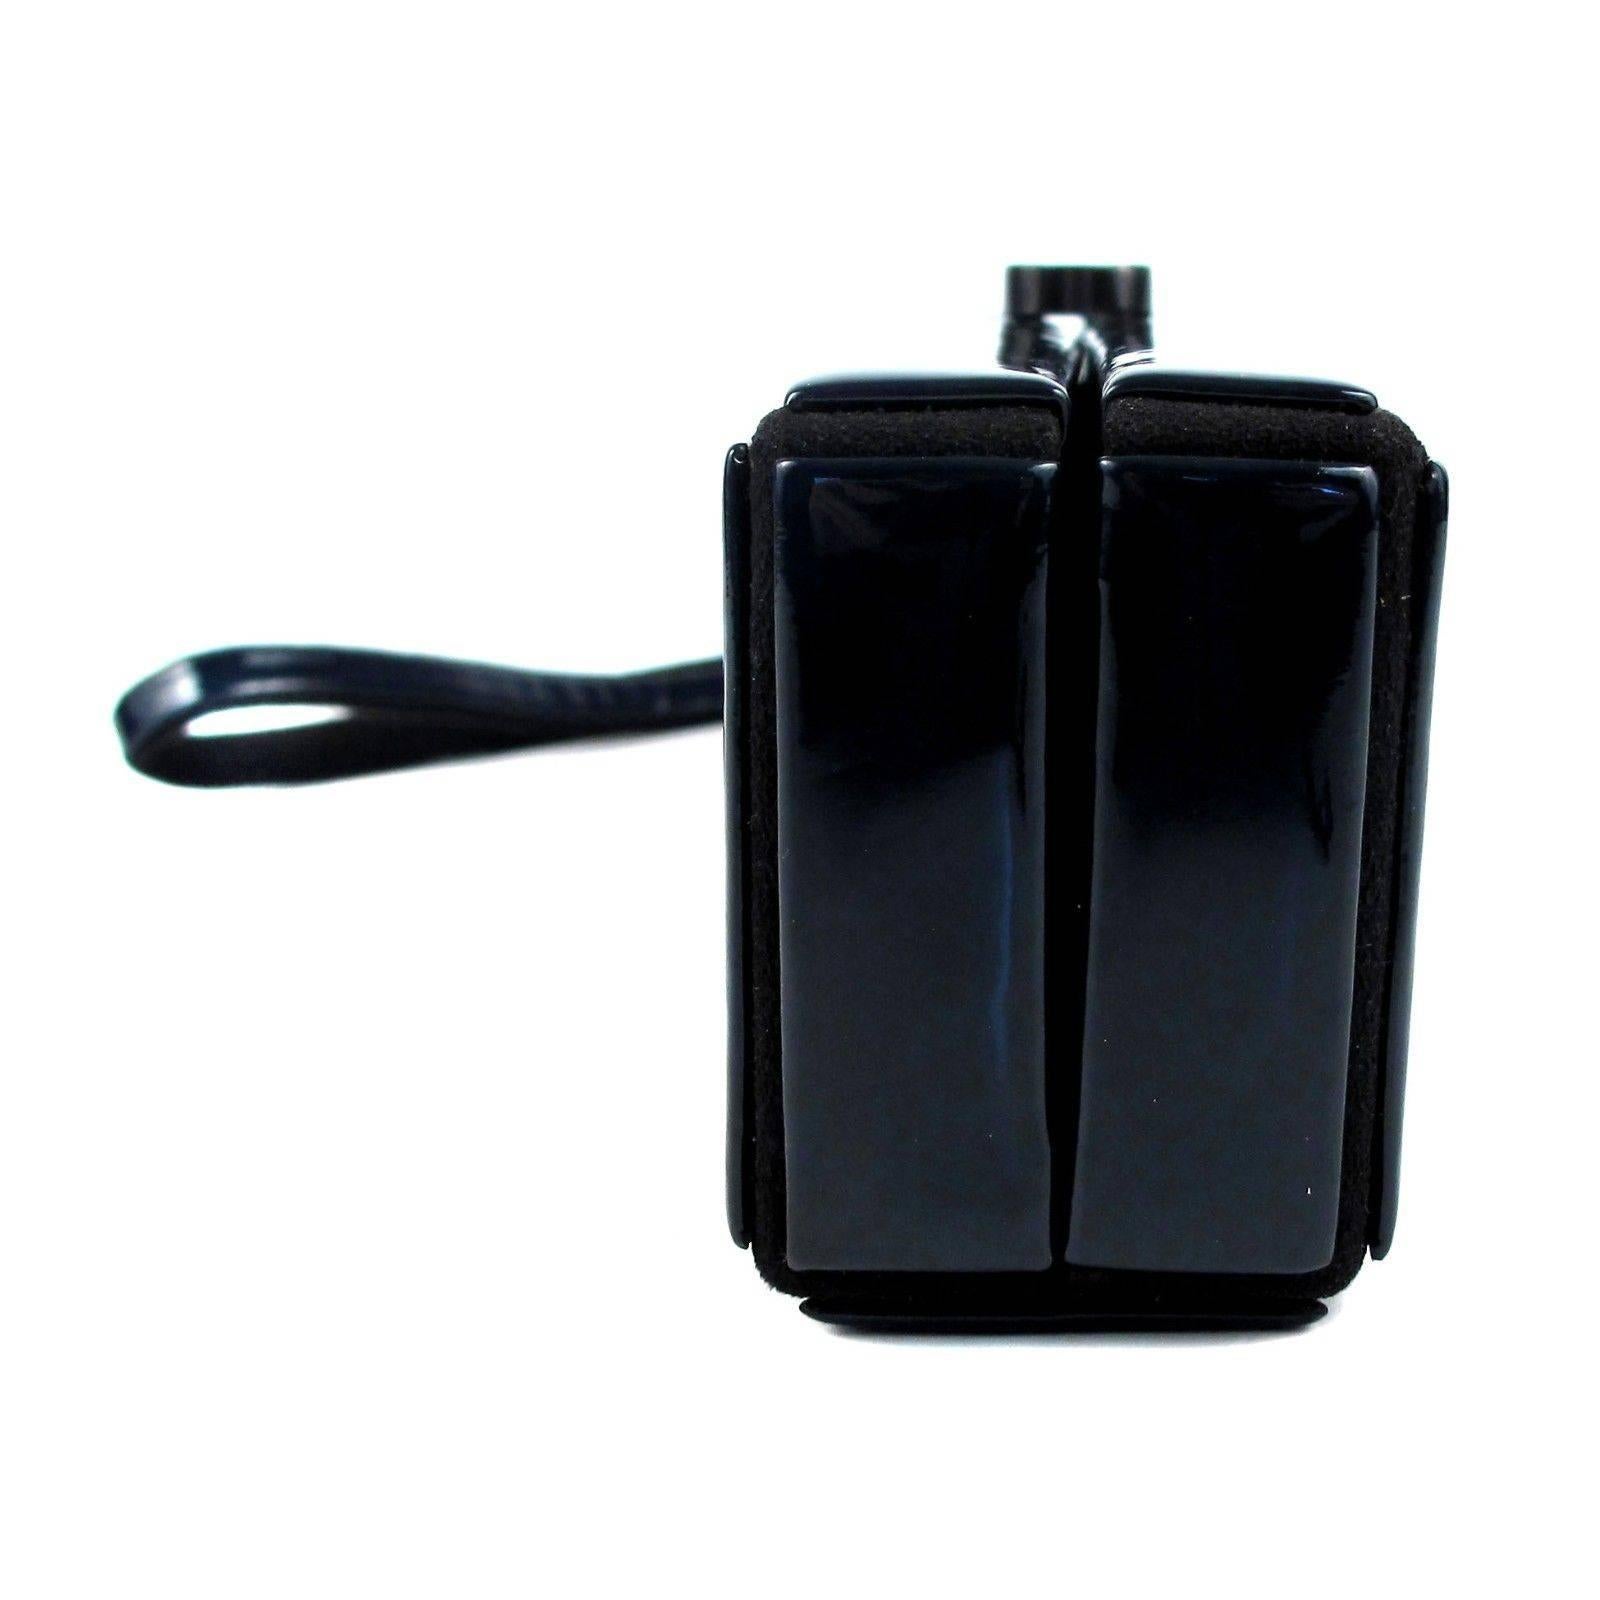 Chanel Clutch Box - Wristlet Blue & Black Leather CC Minaudie Bag Handbag Case 1